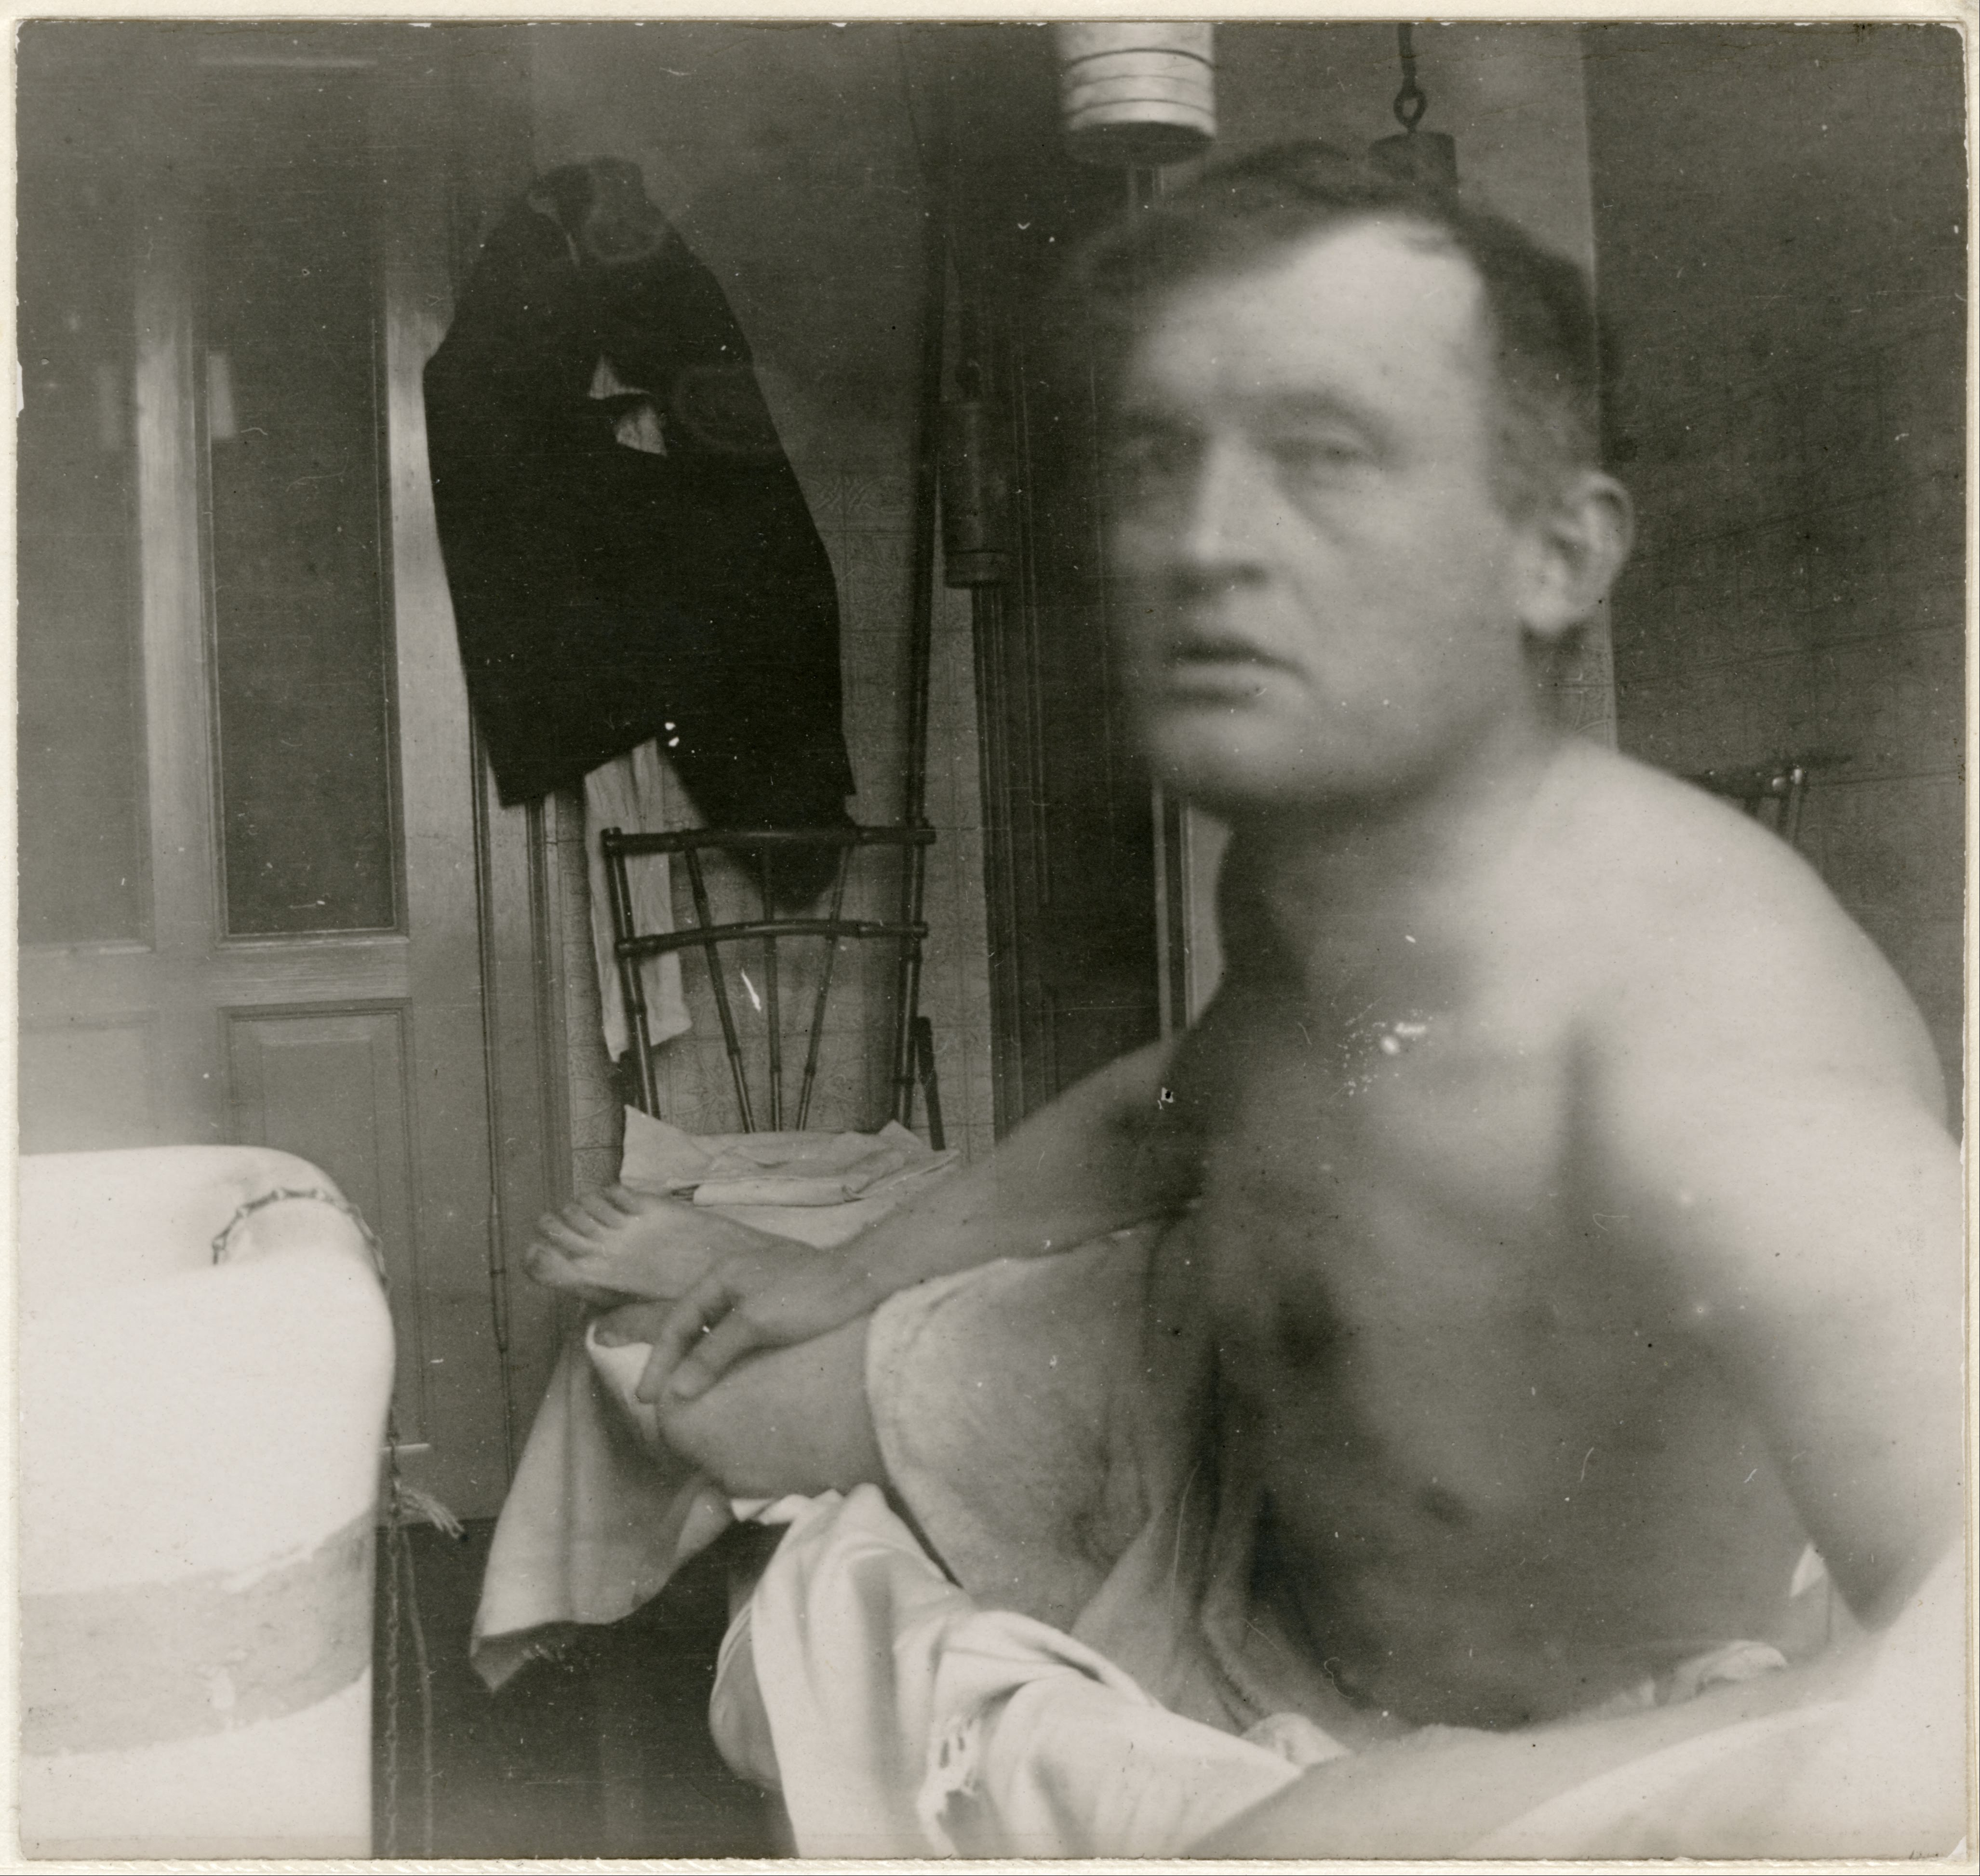 Edvard Munch - 12. December 1863 - 23. January 1944